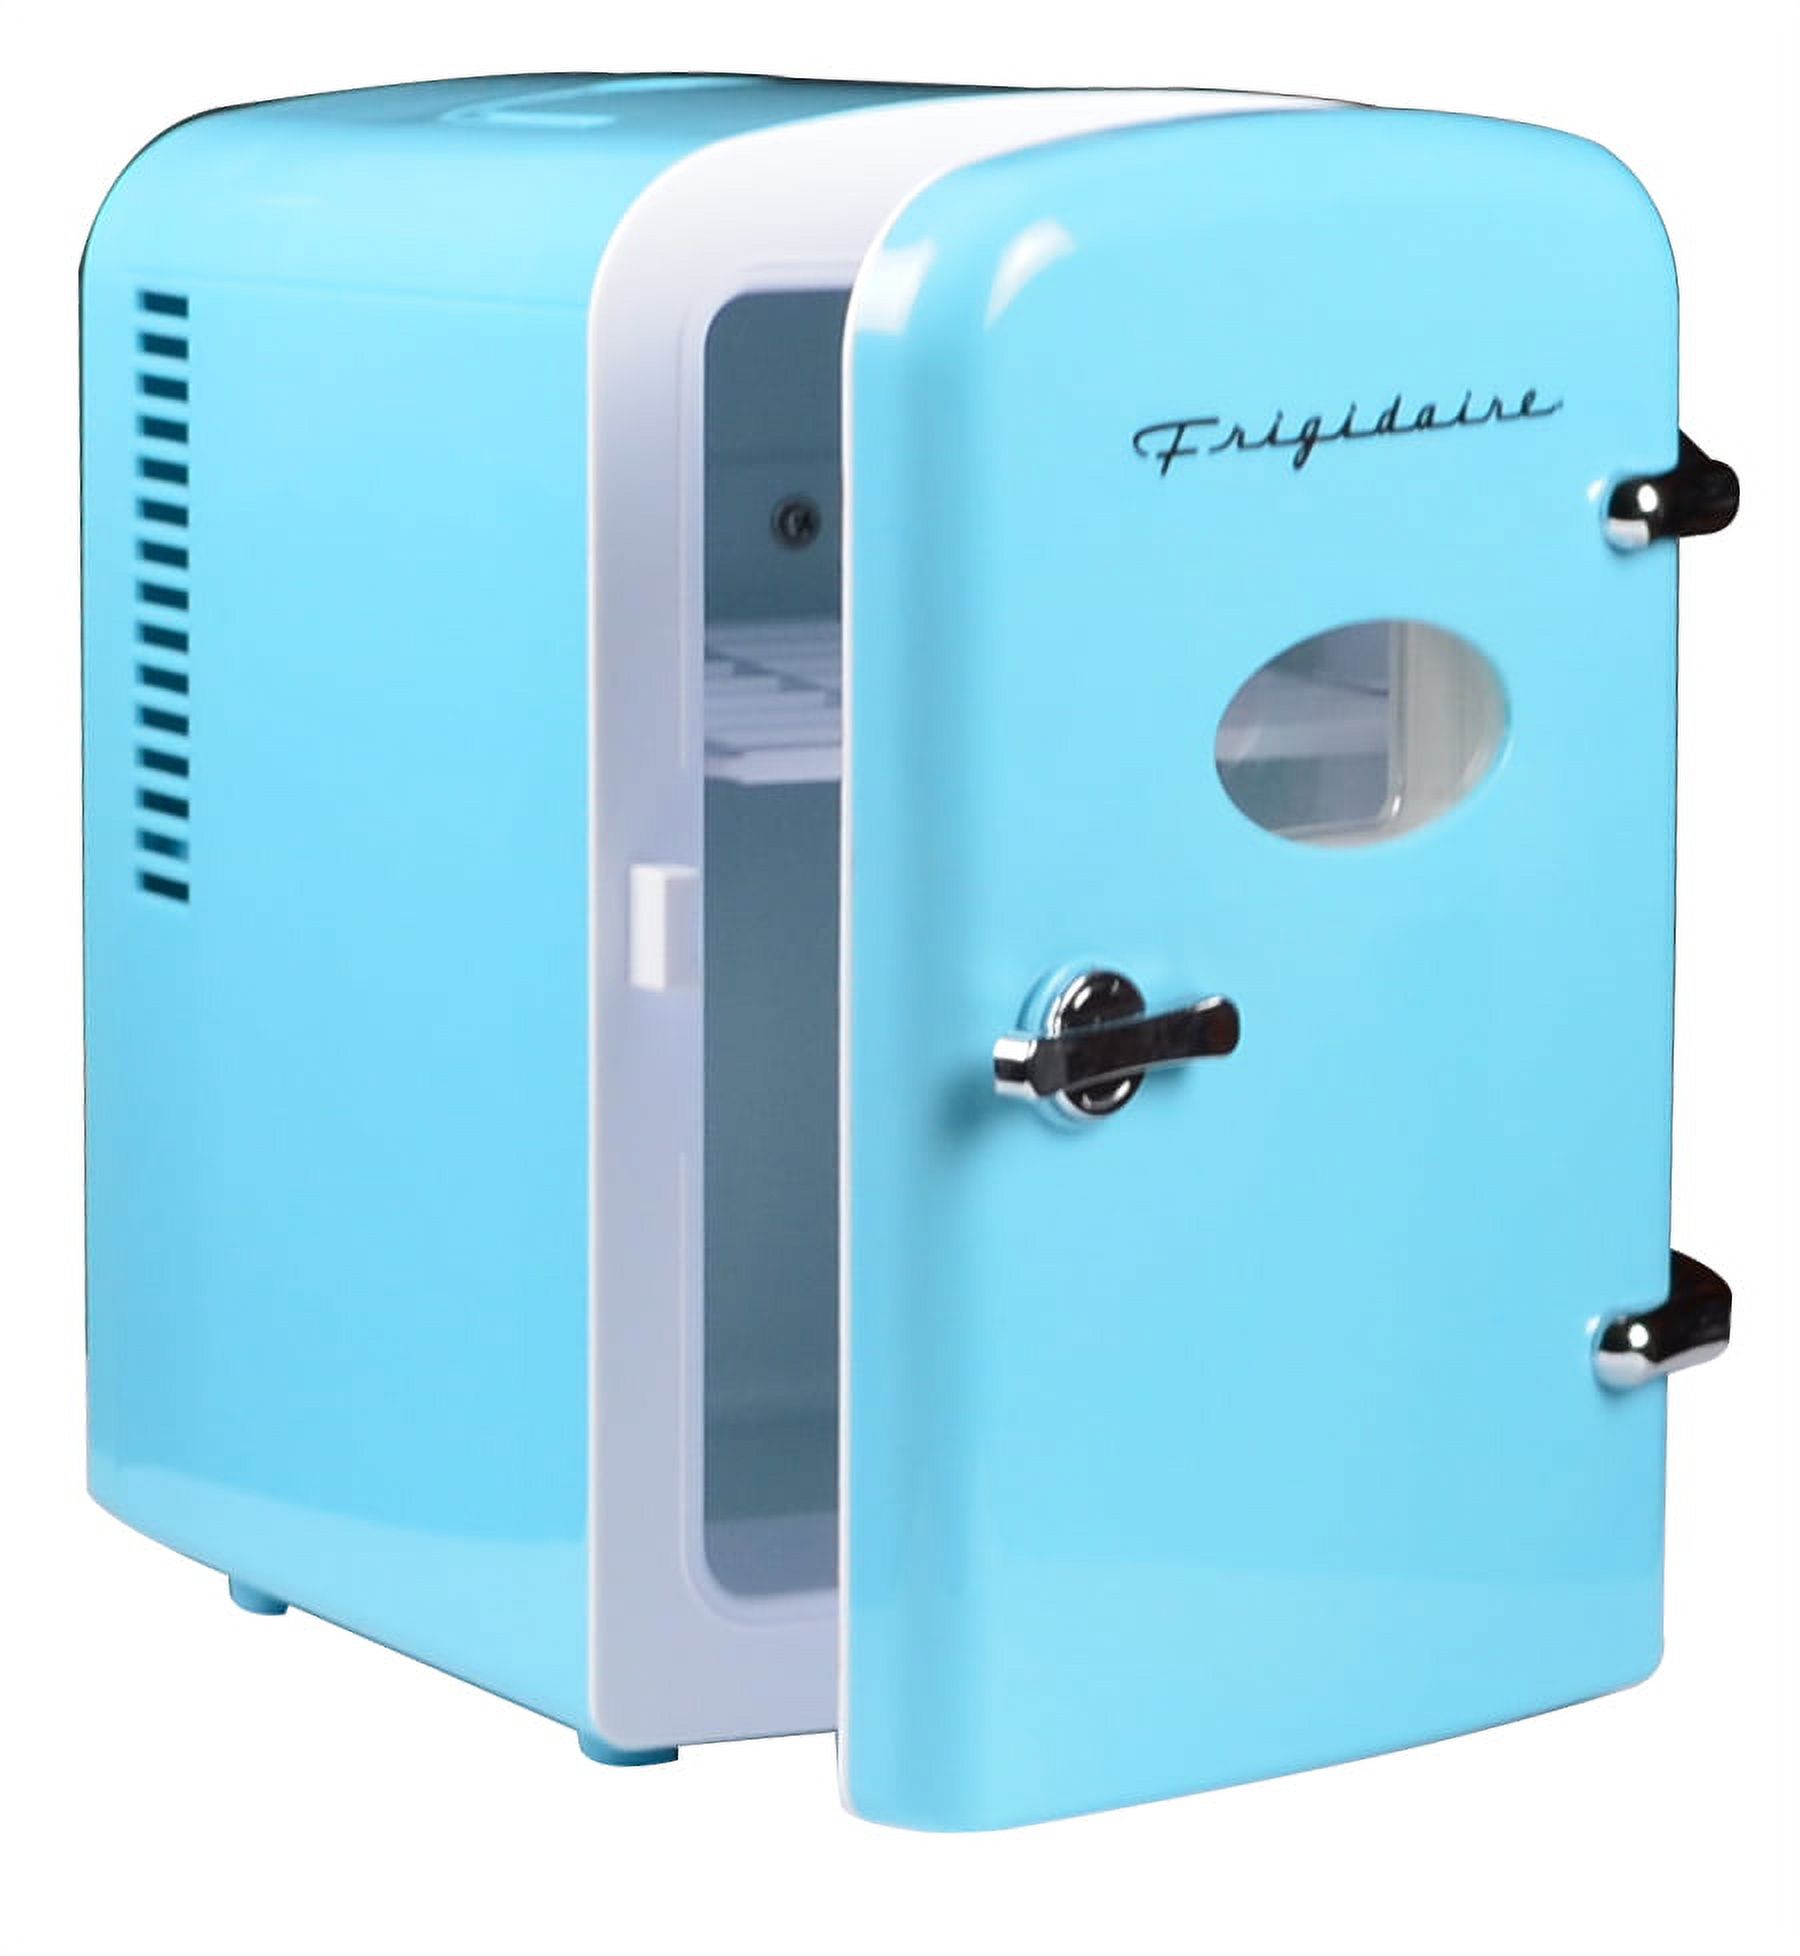 Frigidaire Portable Retro 6 Can Personal Beverage Cooler, EFMIS129, Blue - image 2 of 9